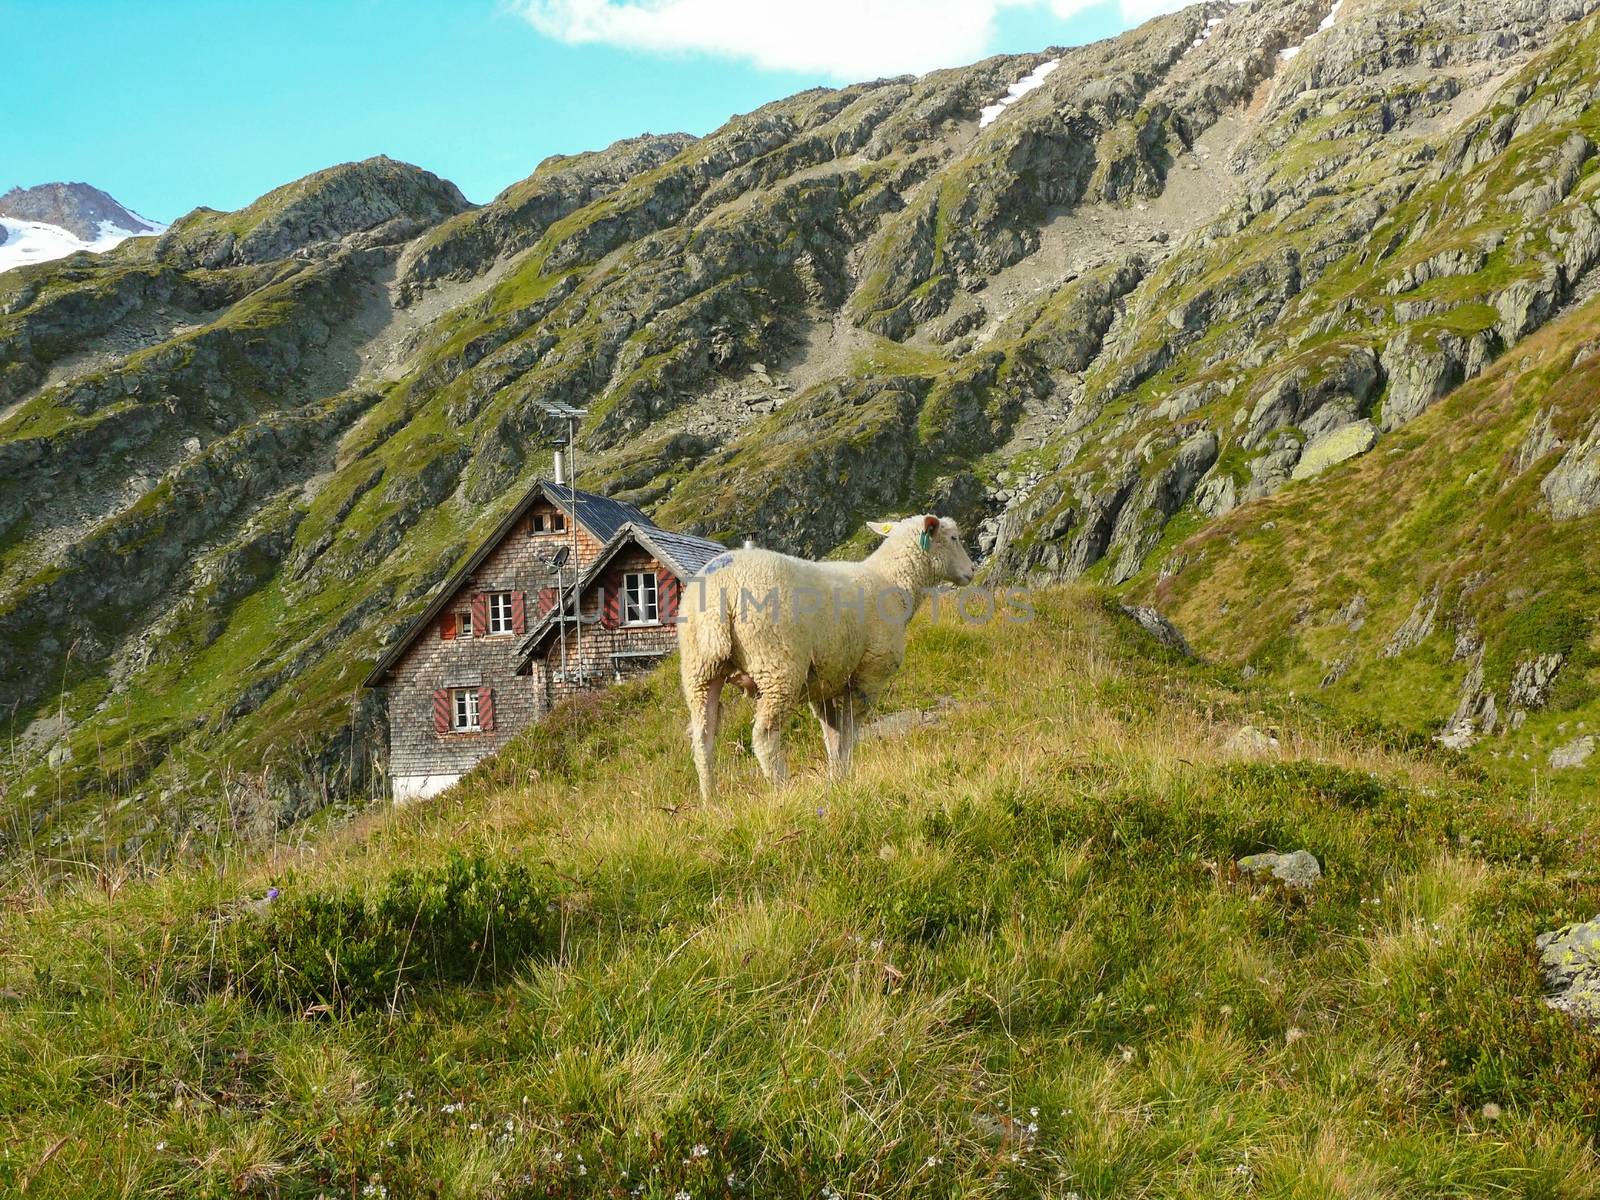 Sheep on alpine glacier mountains near gauli house in switzerland by evolutionnow